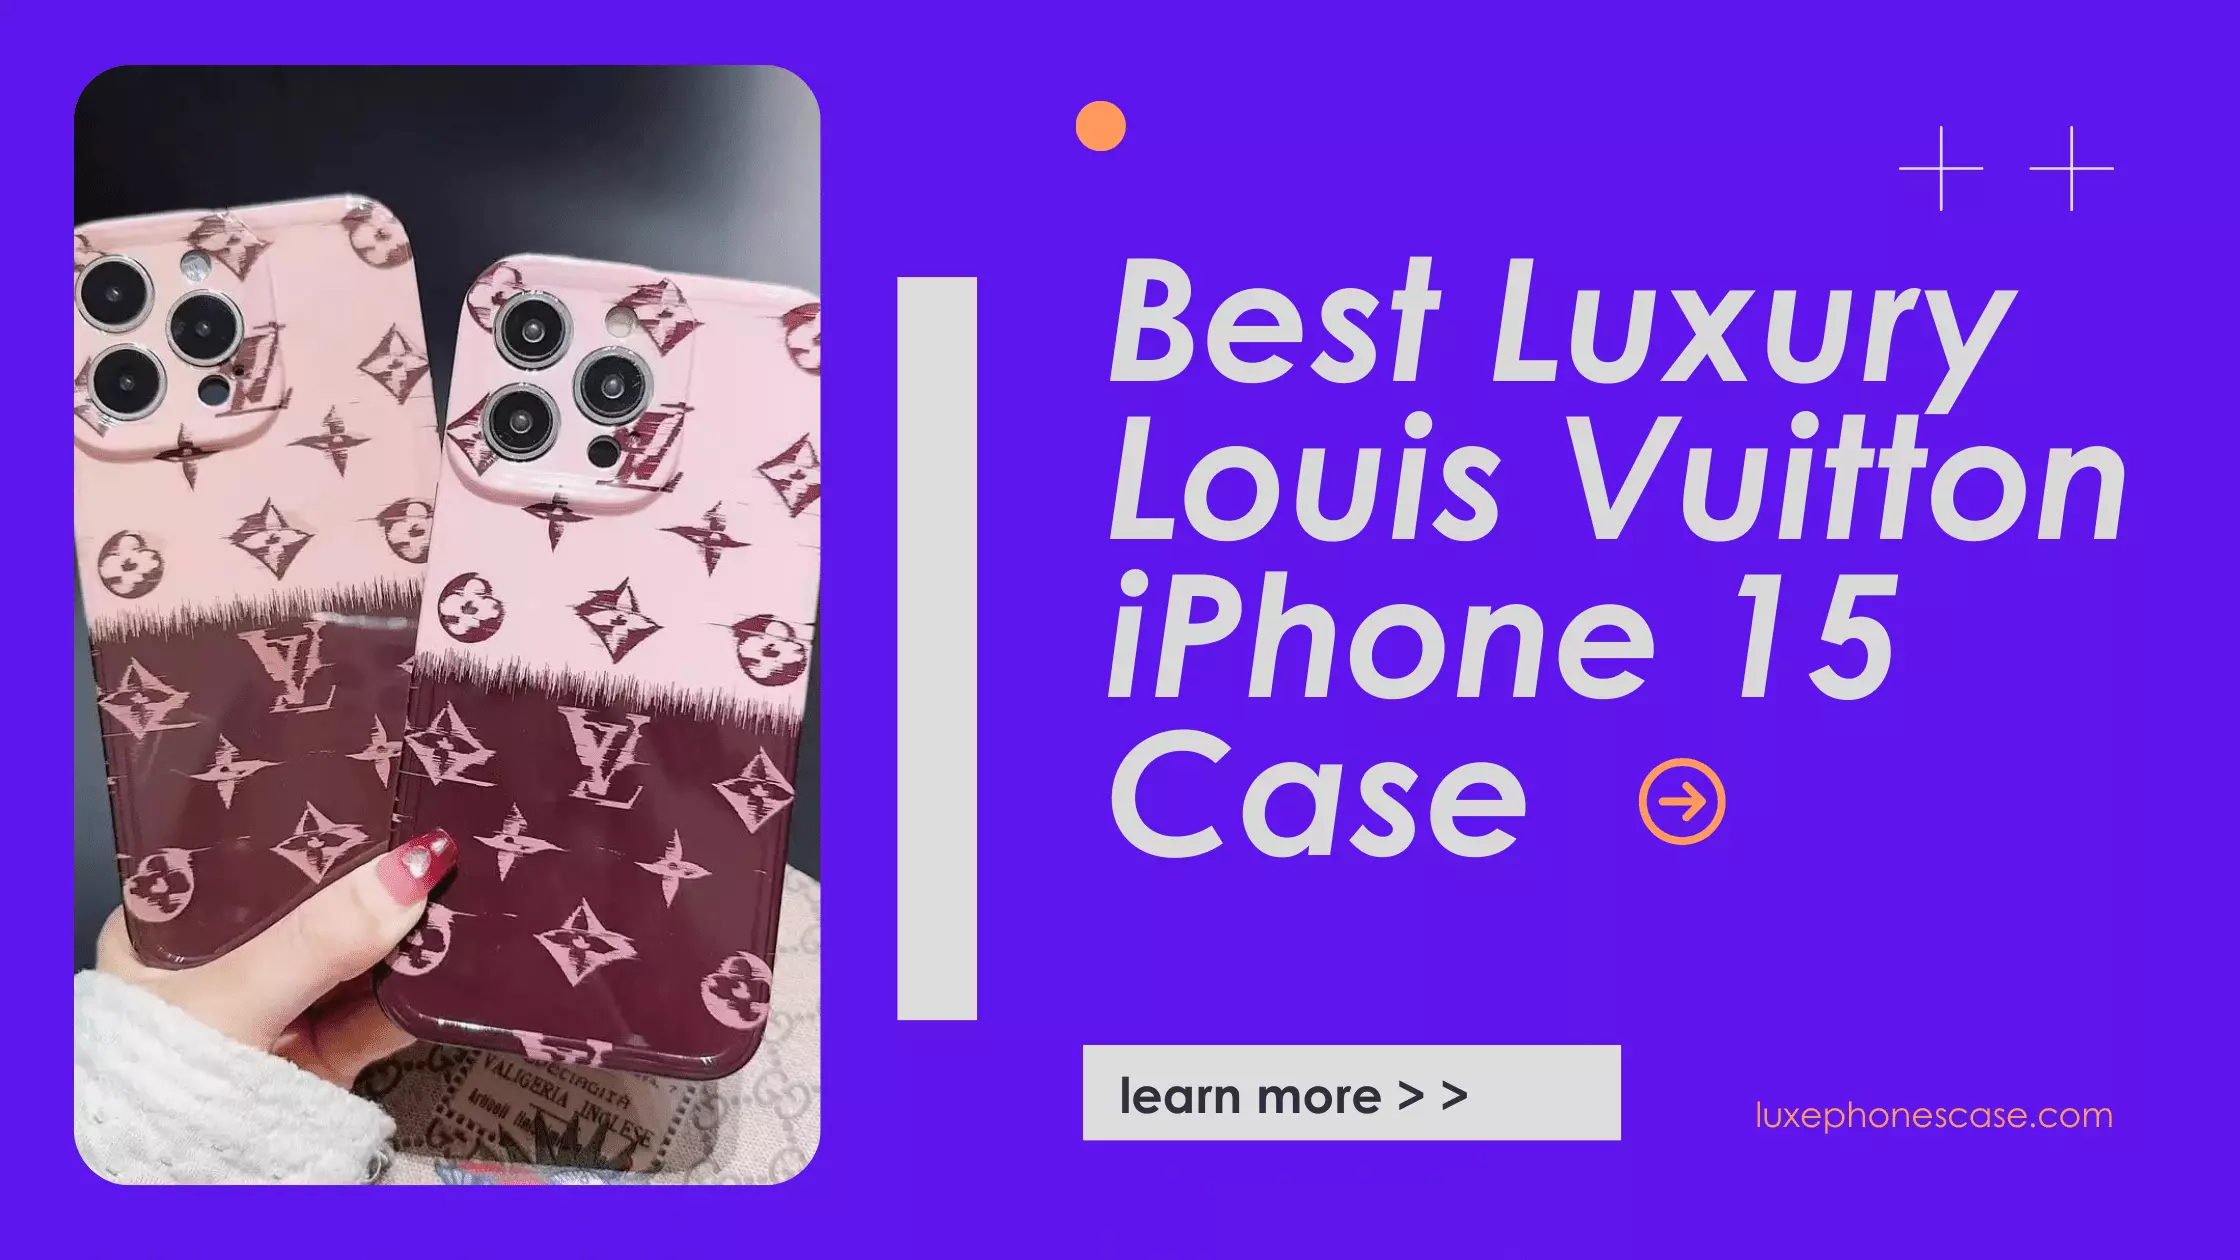 Best Luxury Louis Vuitton iPhone 15 Case